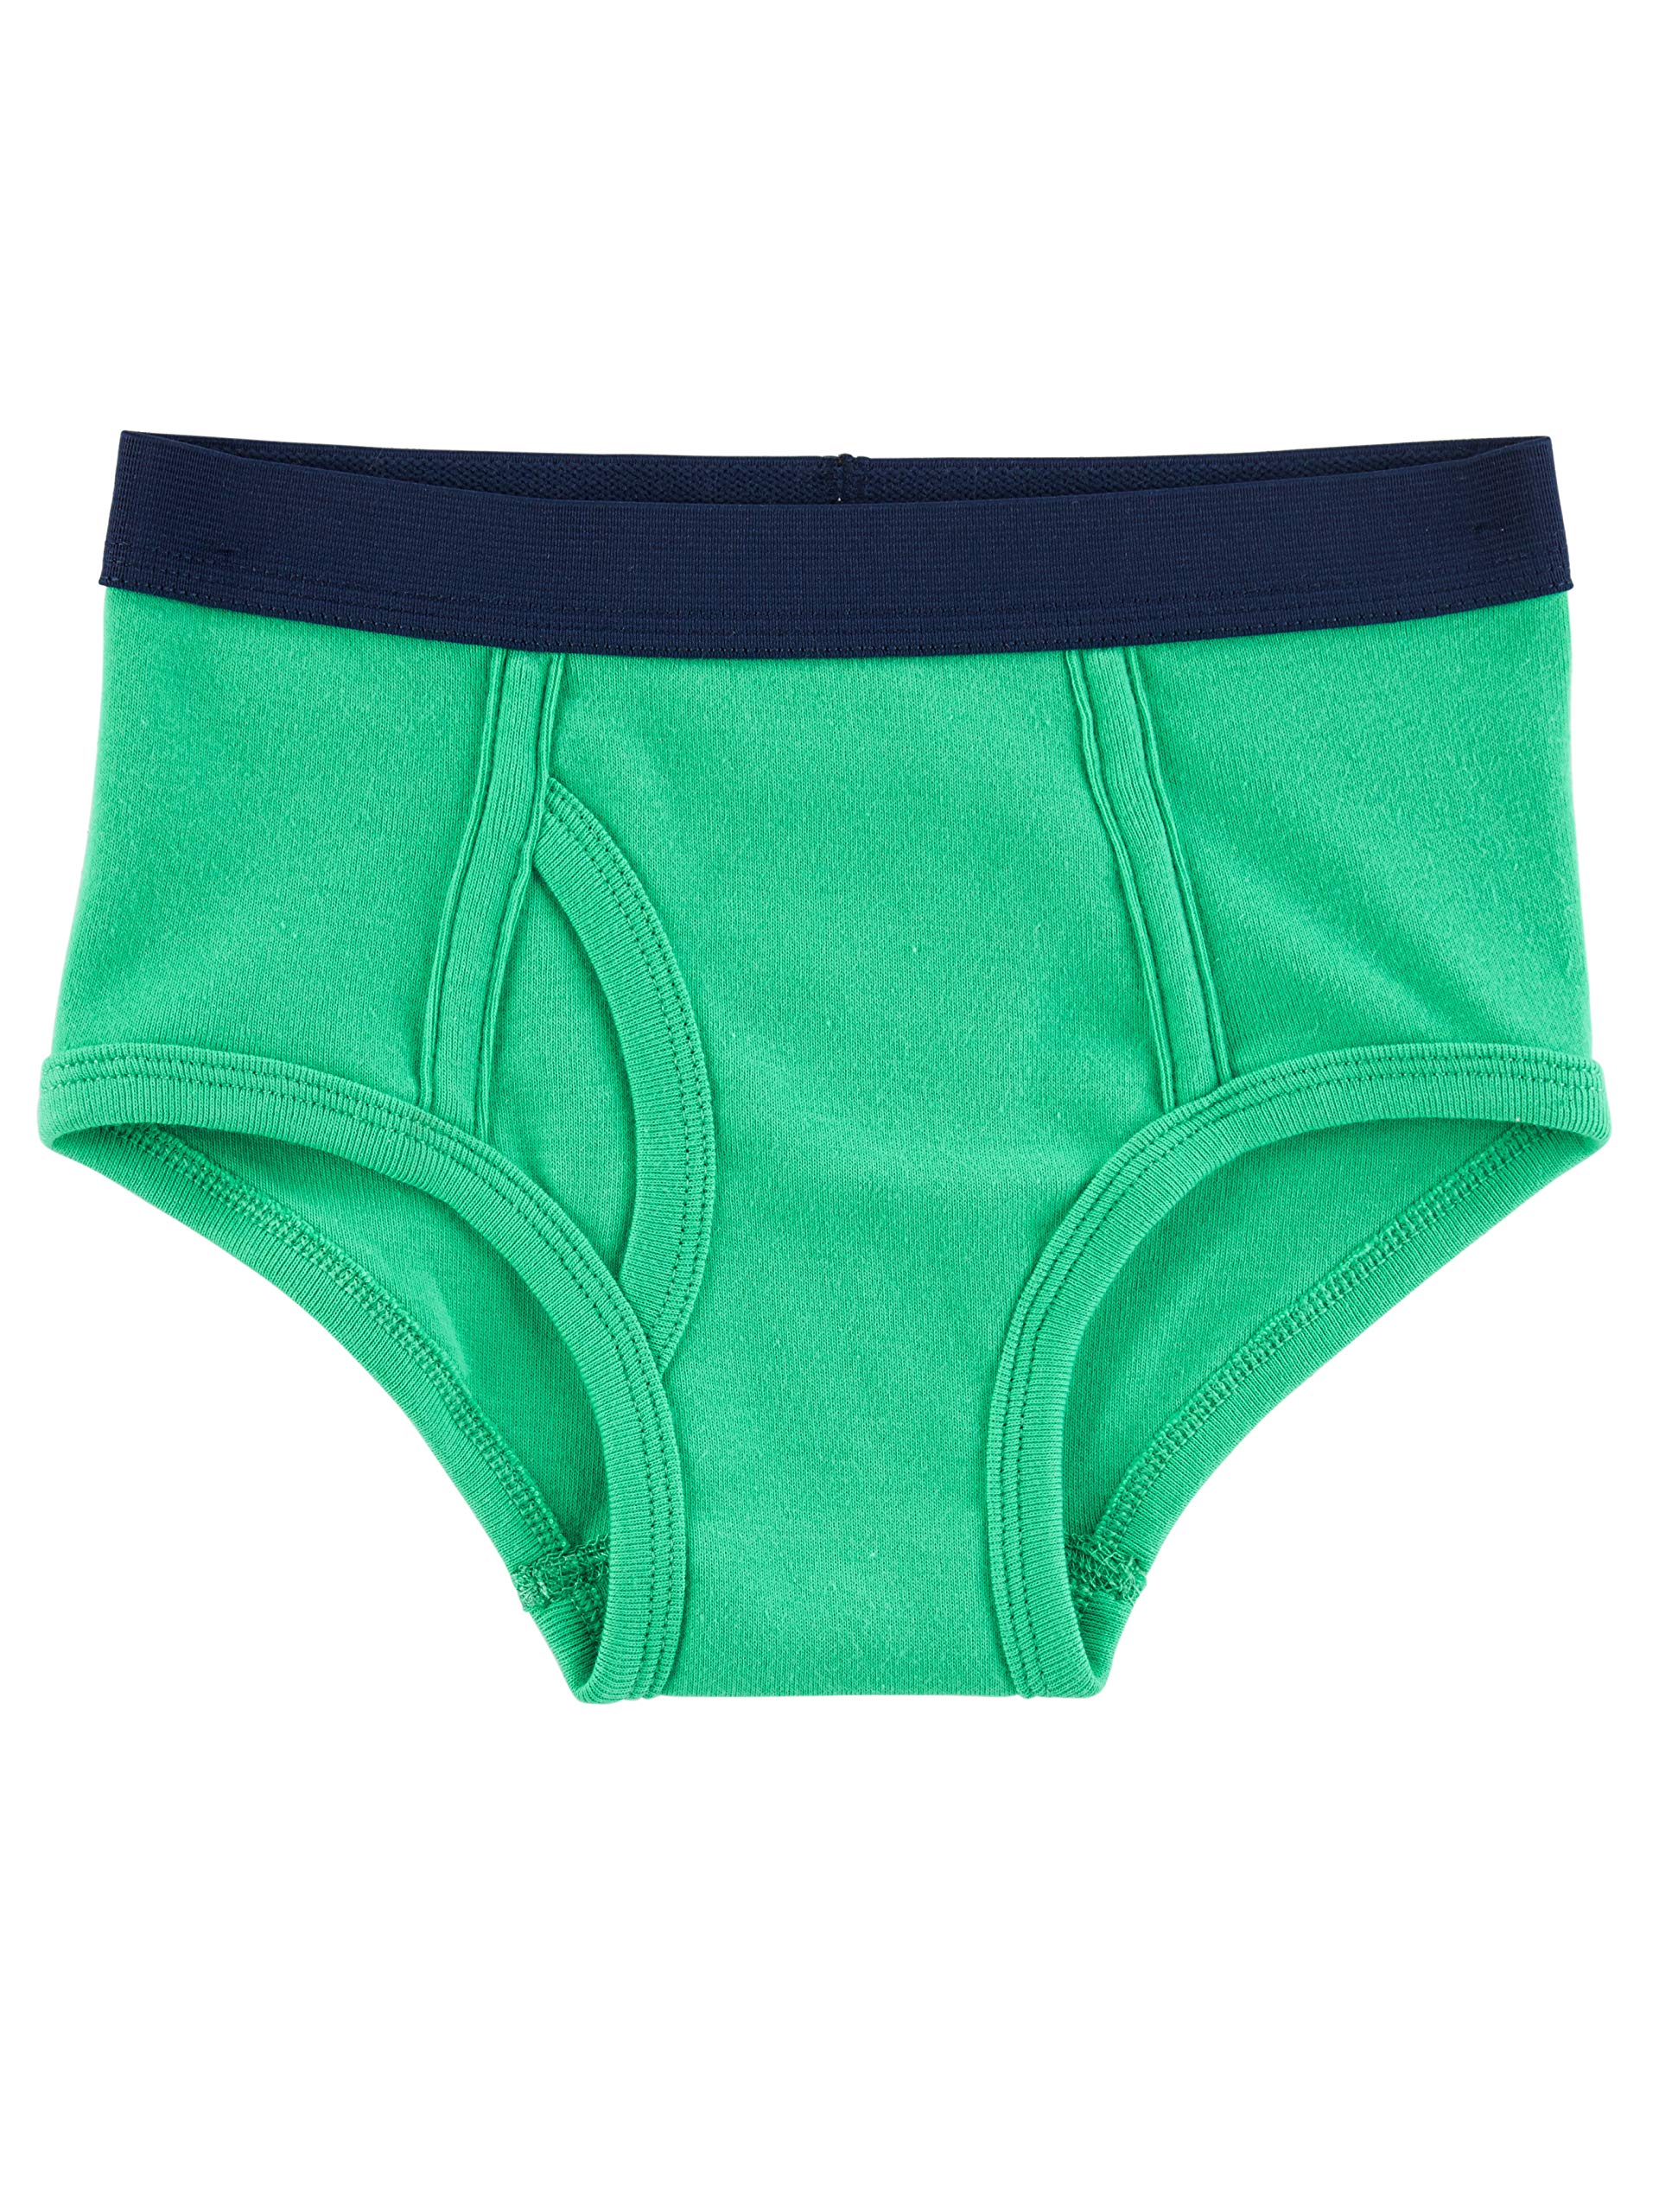 Simple Joys by Carter's Boys' Underwear, Pack of 8